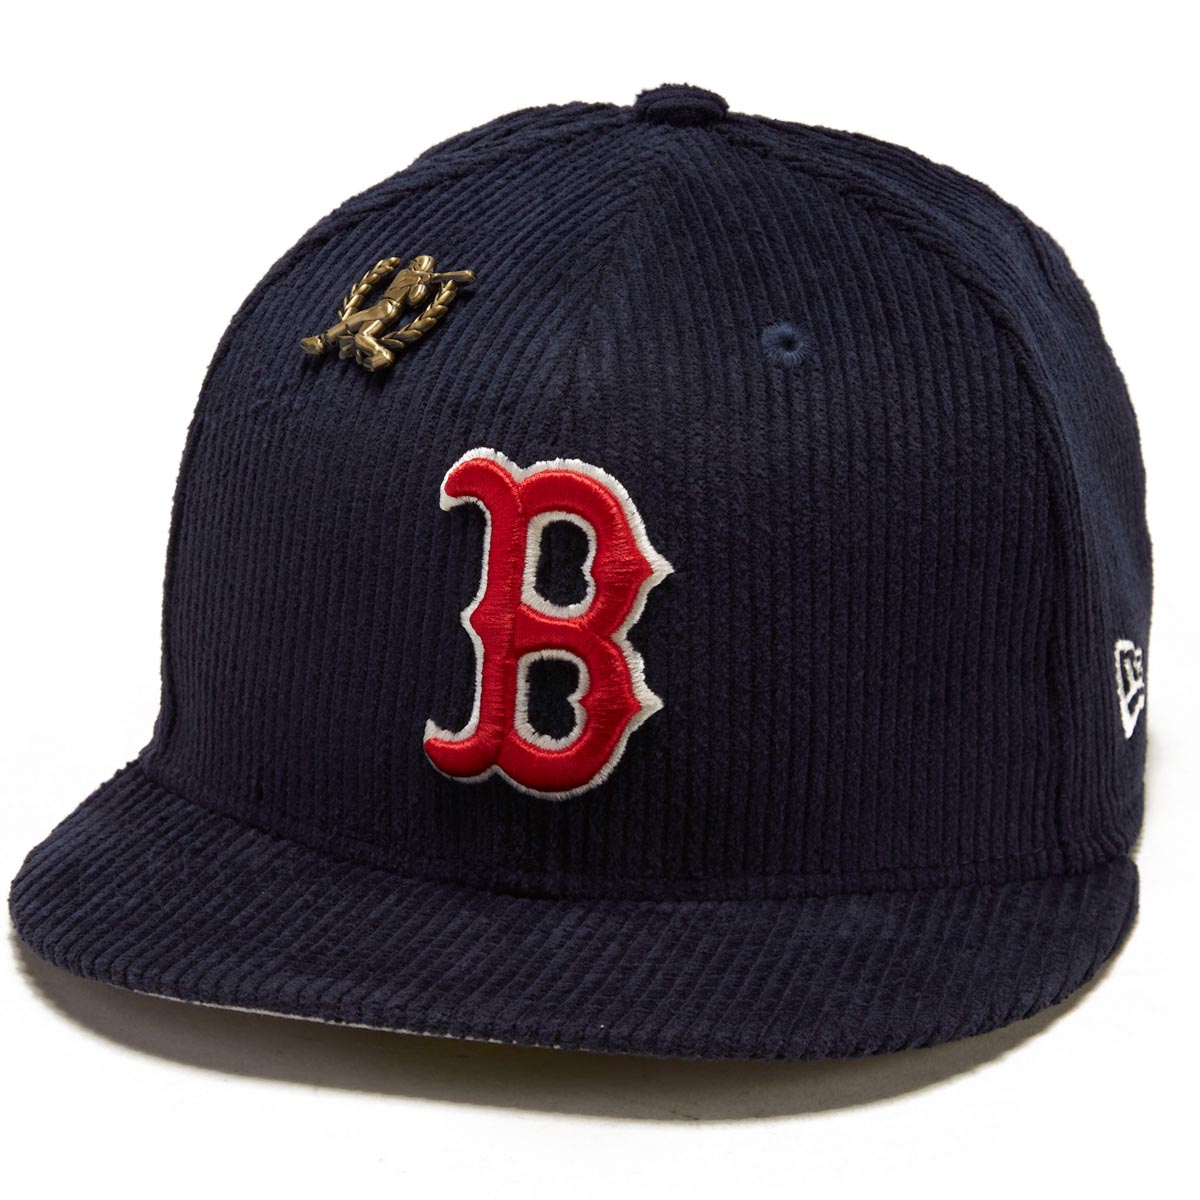 New Era 5950 Letterman Pin Hat - Boston Red Sox image 1